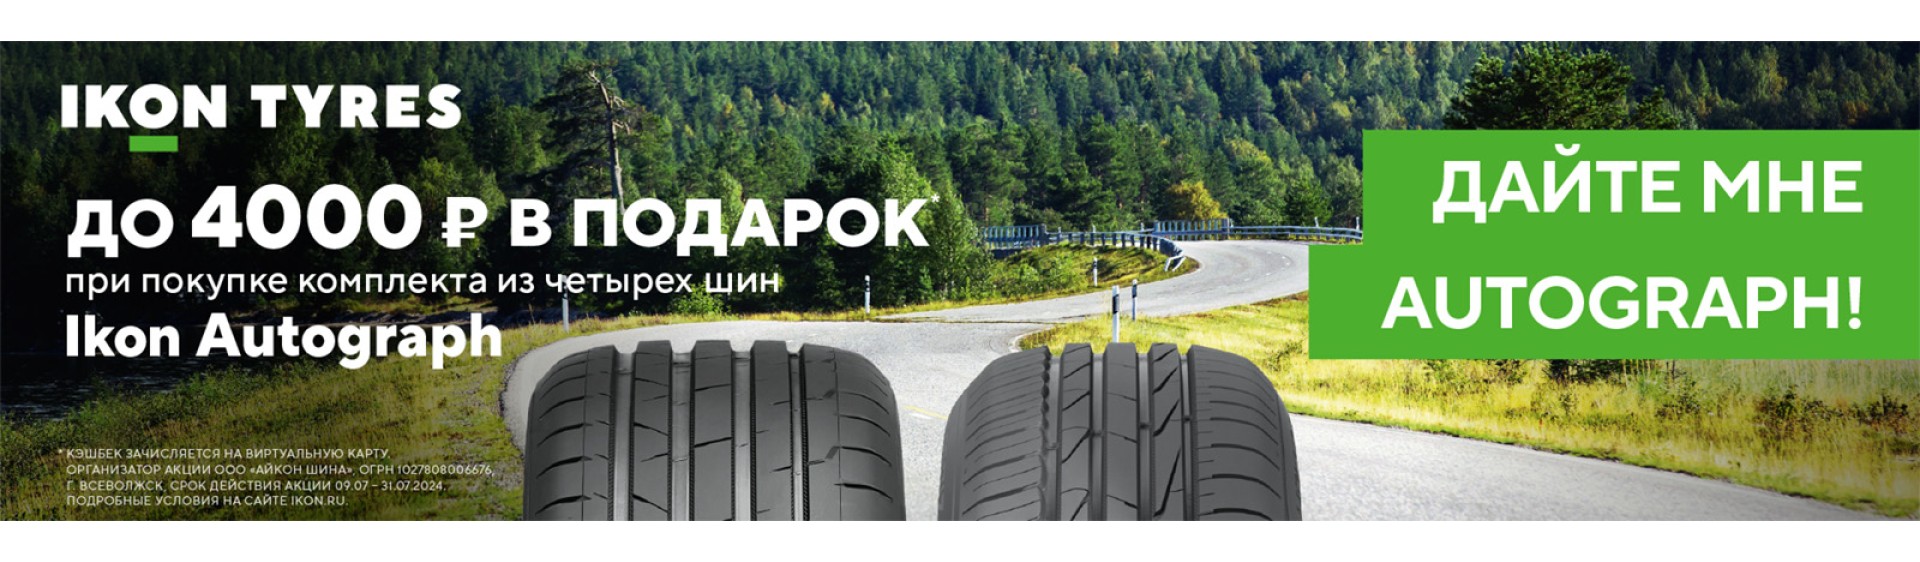 Ikon Tyres акция на летние шины